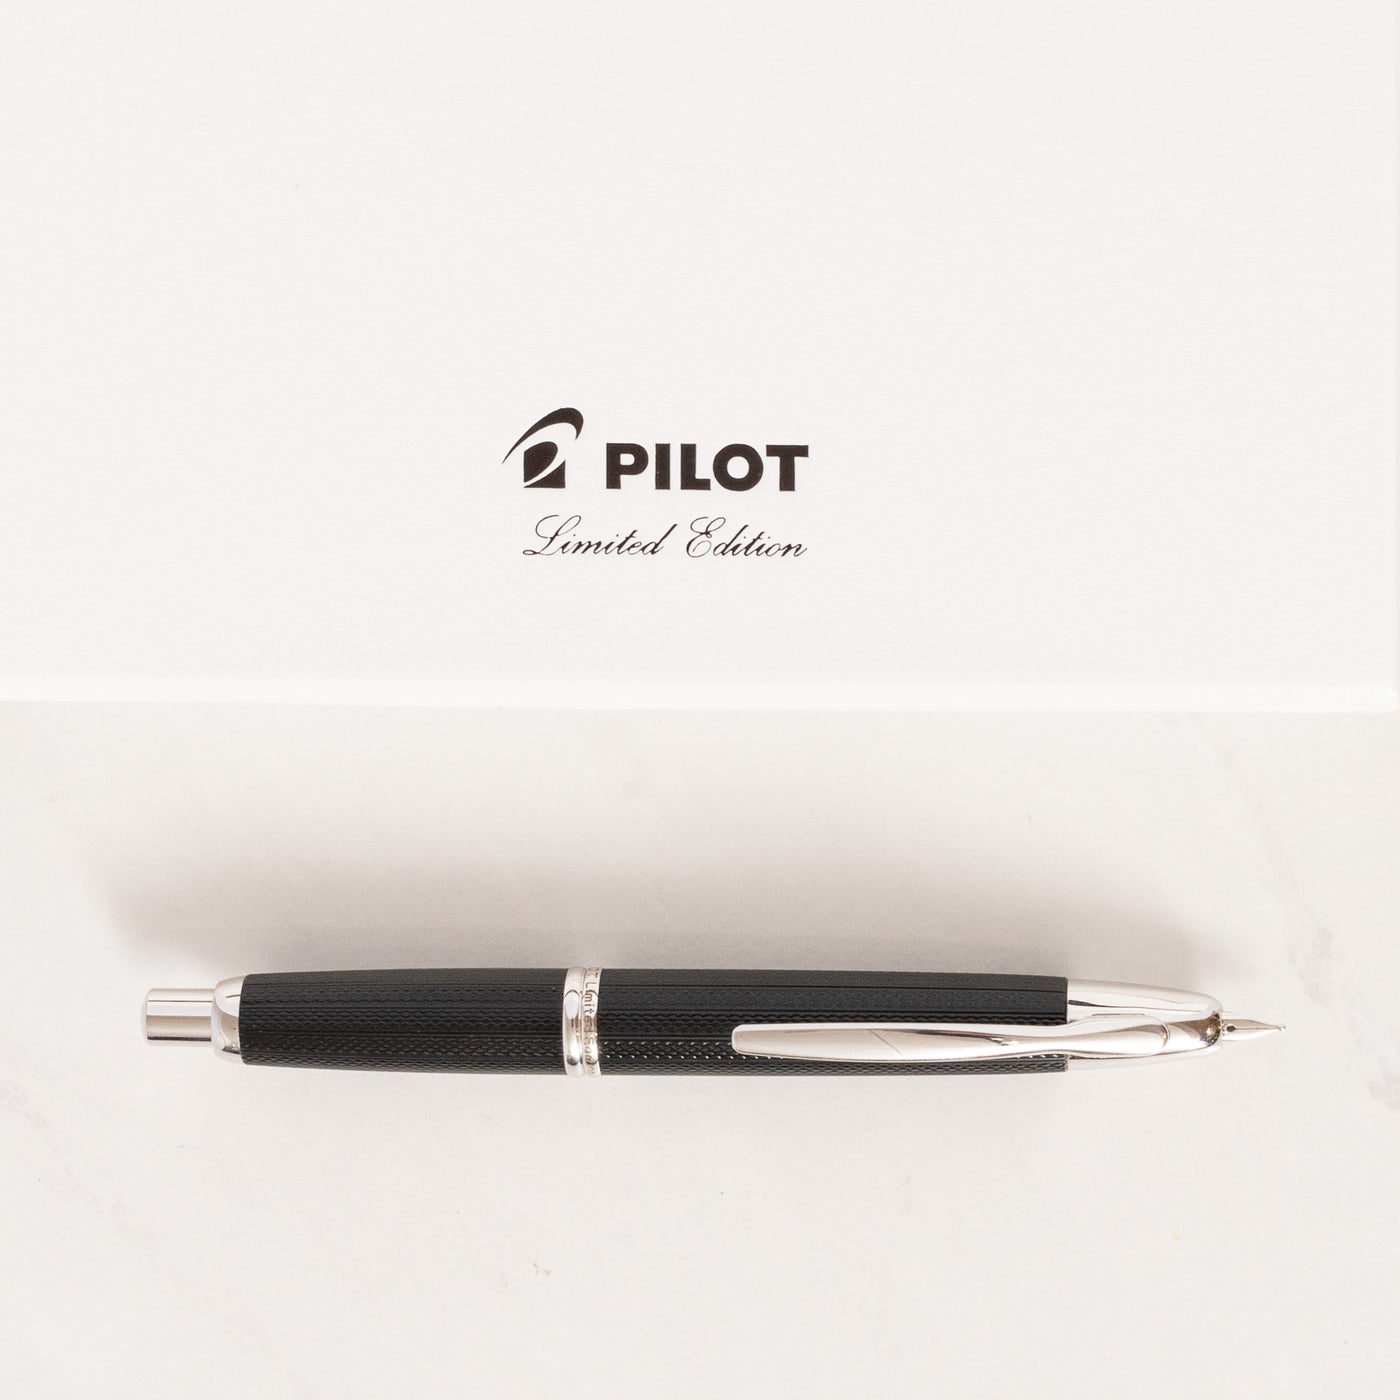 Pilot Vanishing Point Limited Edition 2016 Guilloche Fountain Pen rare